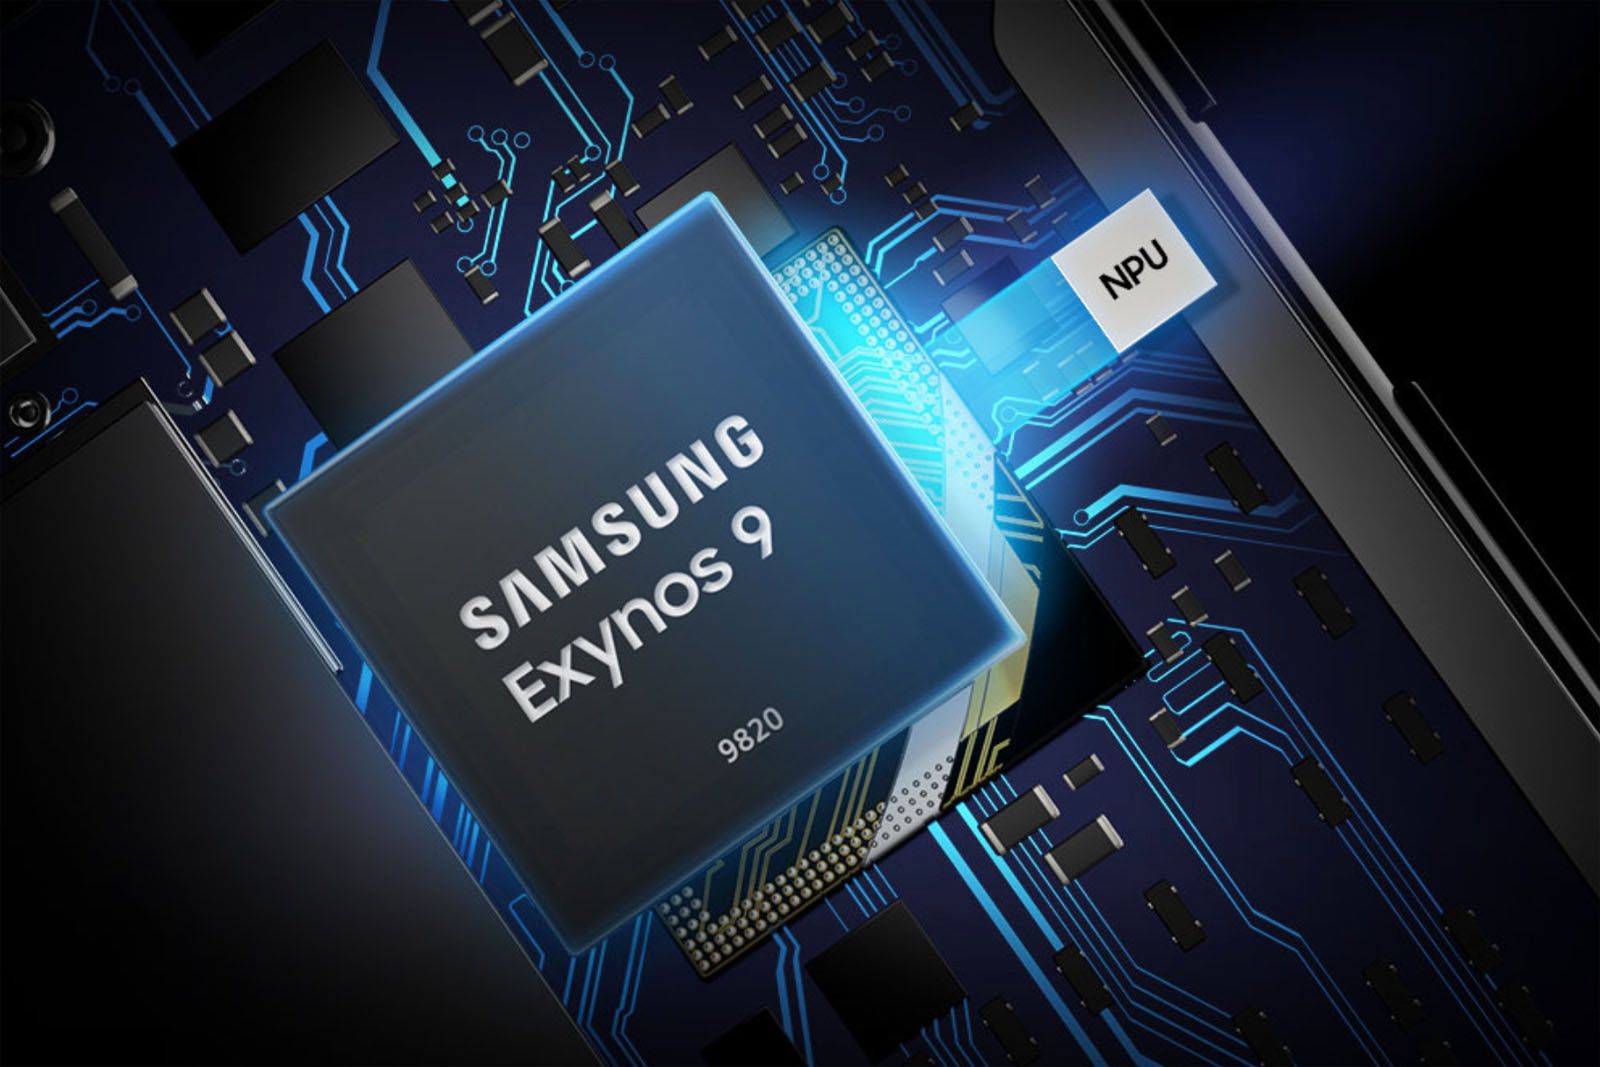 Samsung Galaxy S10 Exynos 9820 image 1